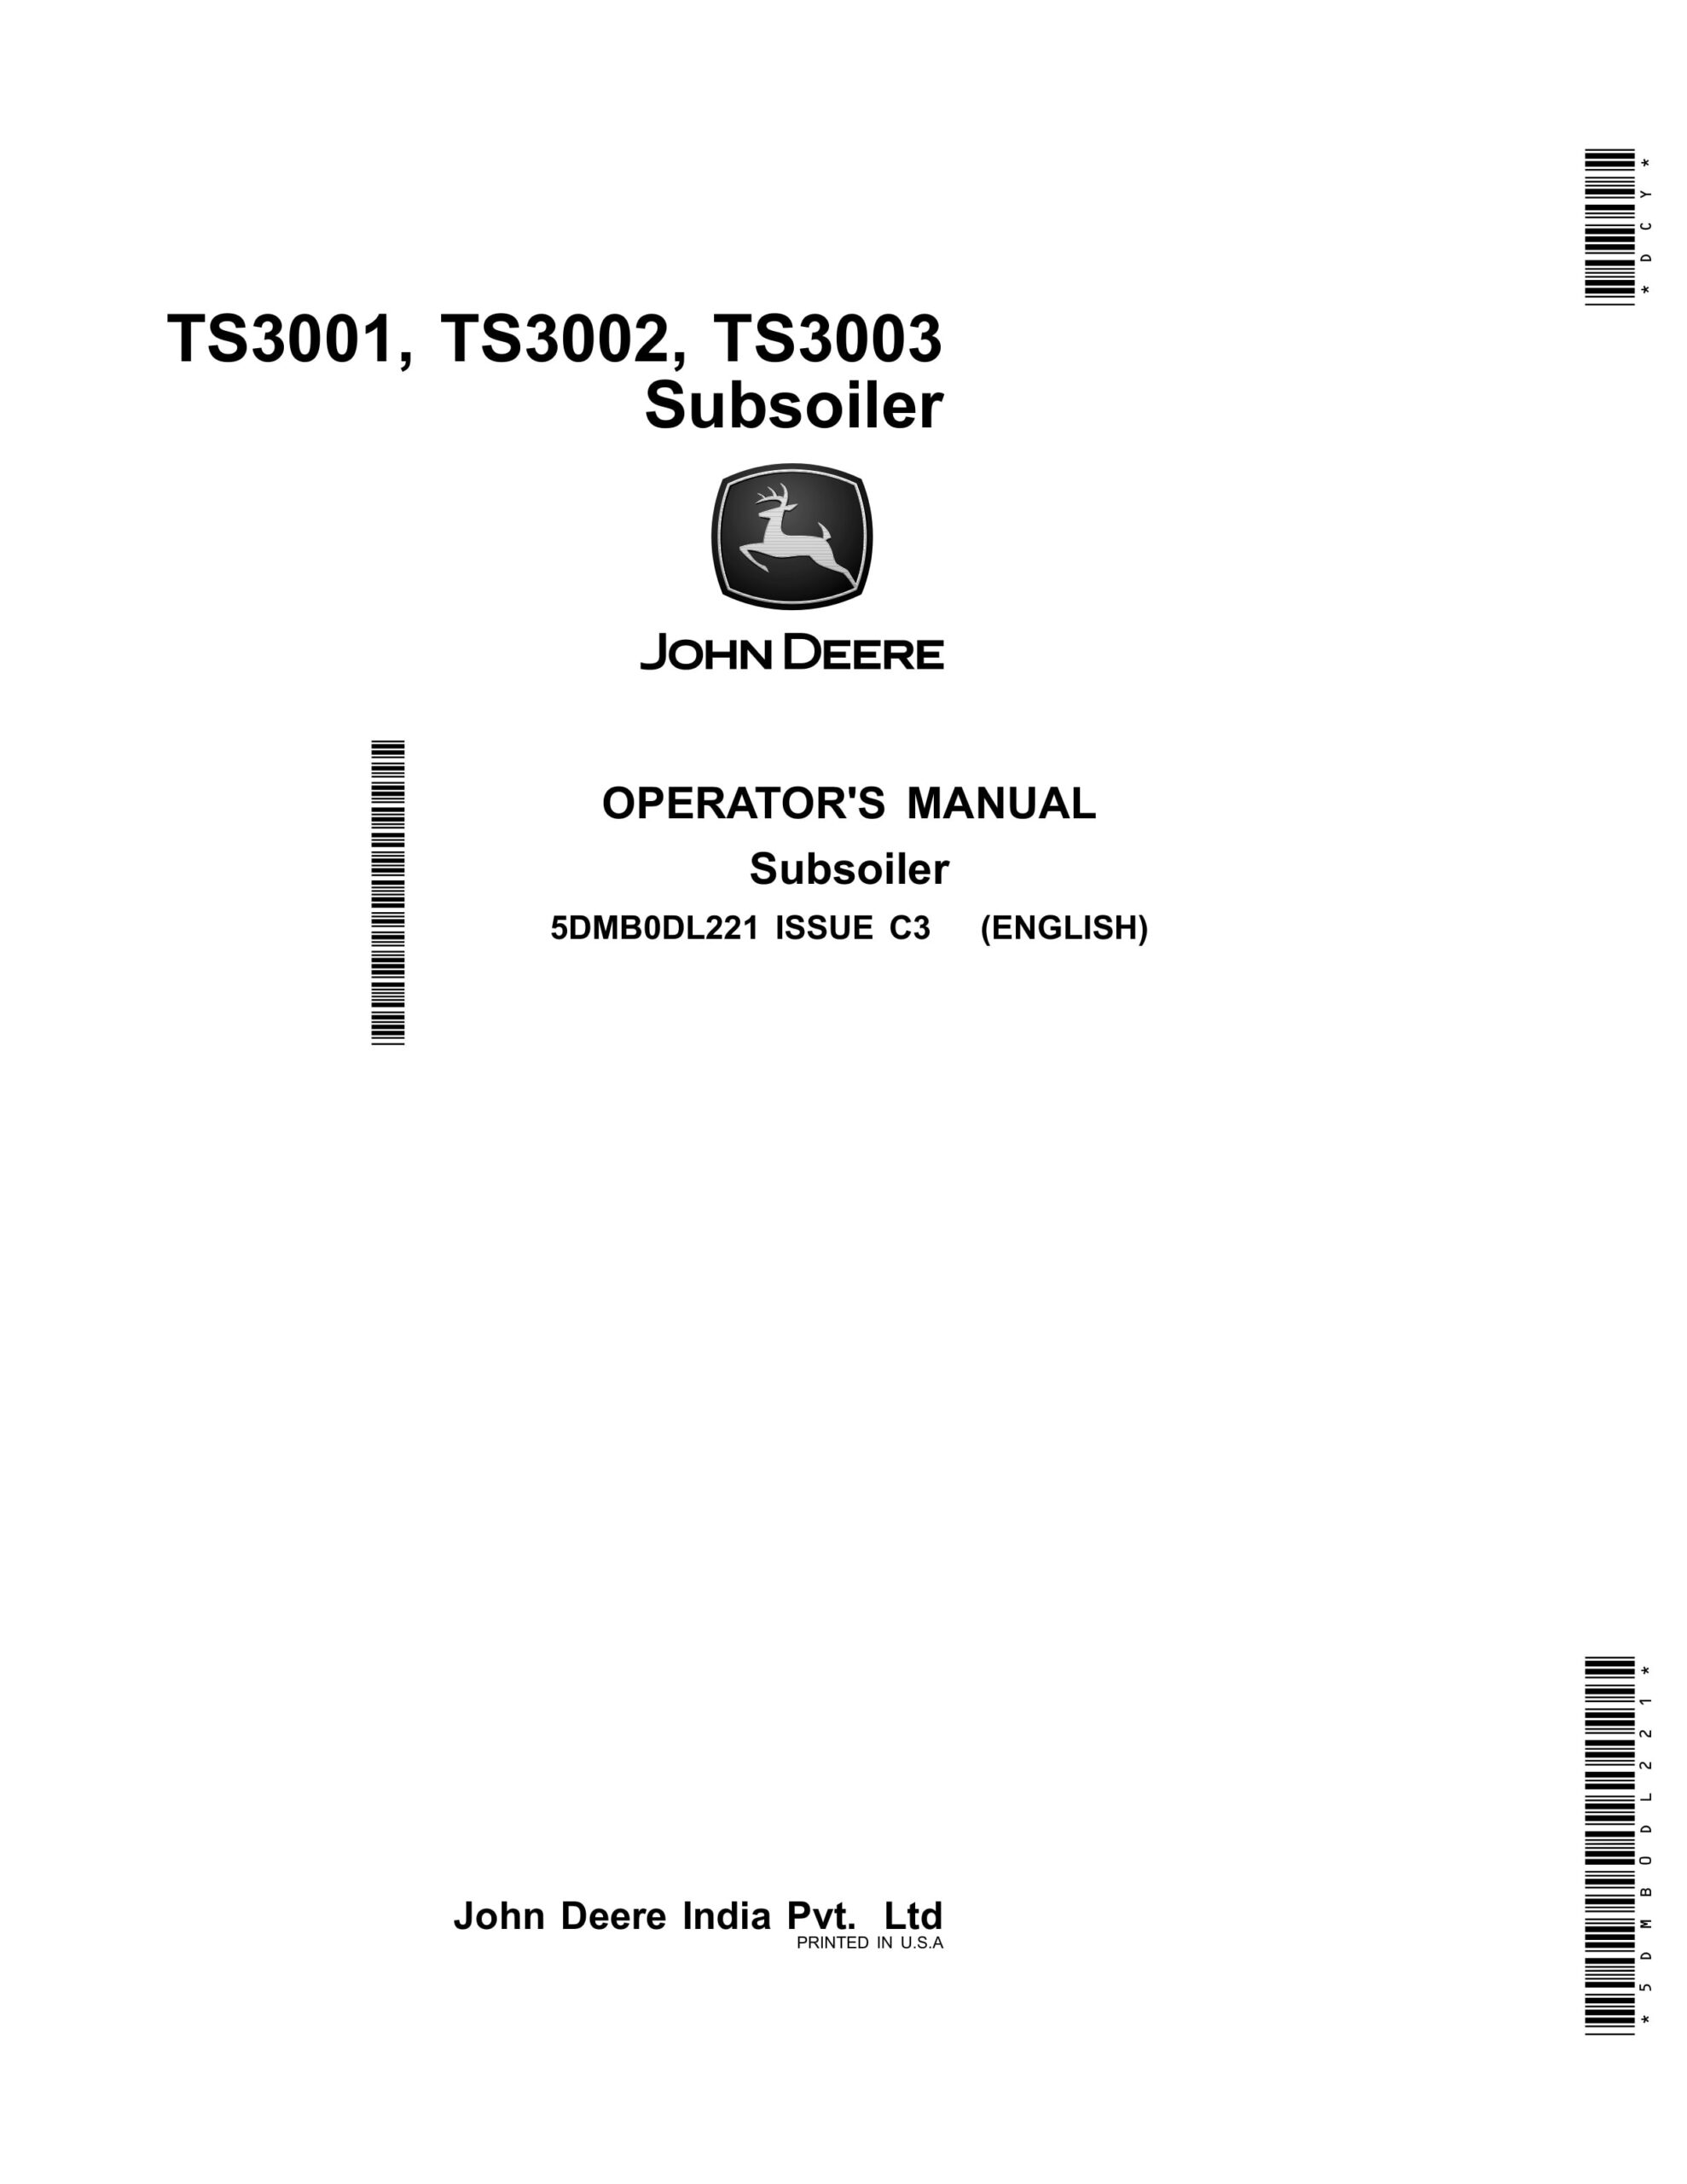 John Deere TS3001, TS3002, TS3003 Subsoiler Operator Manual 5DMB0DL221-1